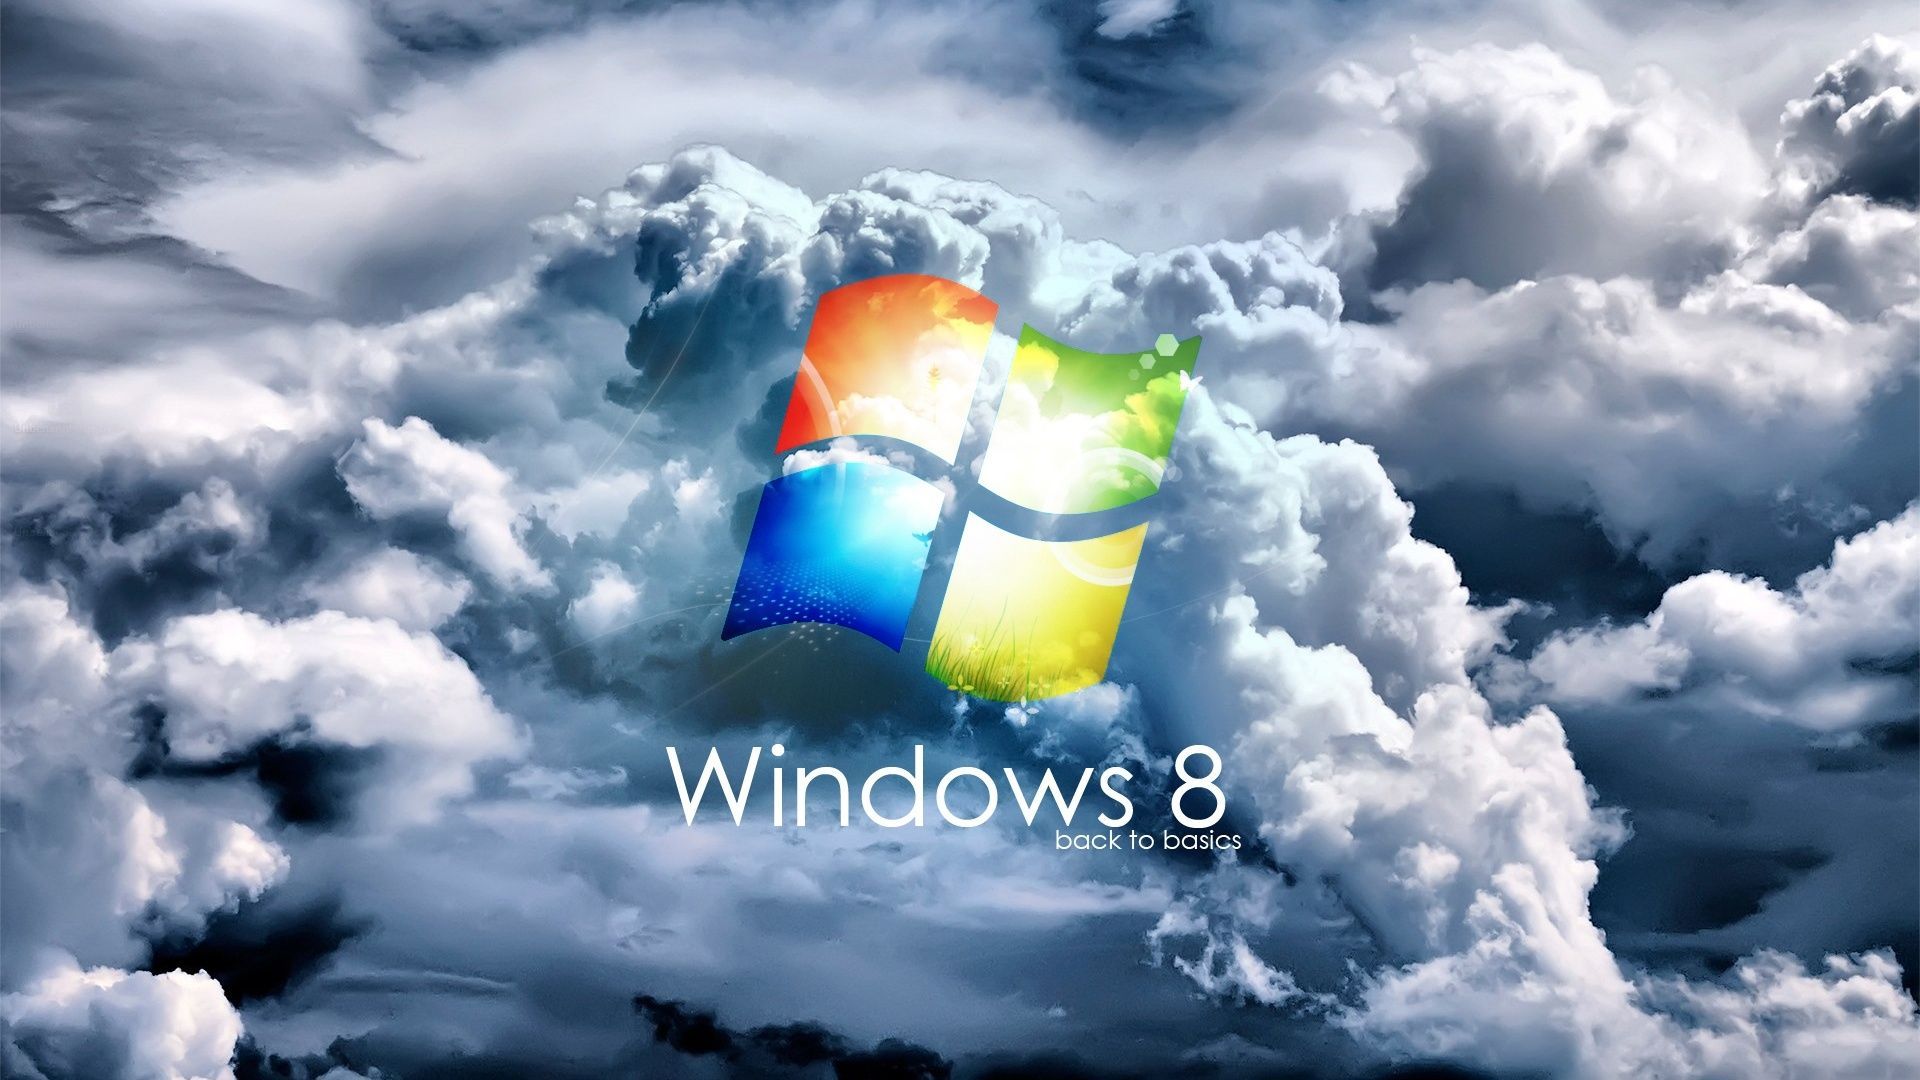 Windows 8 Desktop Themes wallpaper 168489